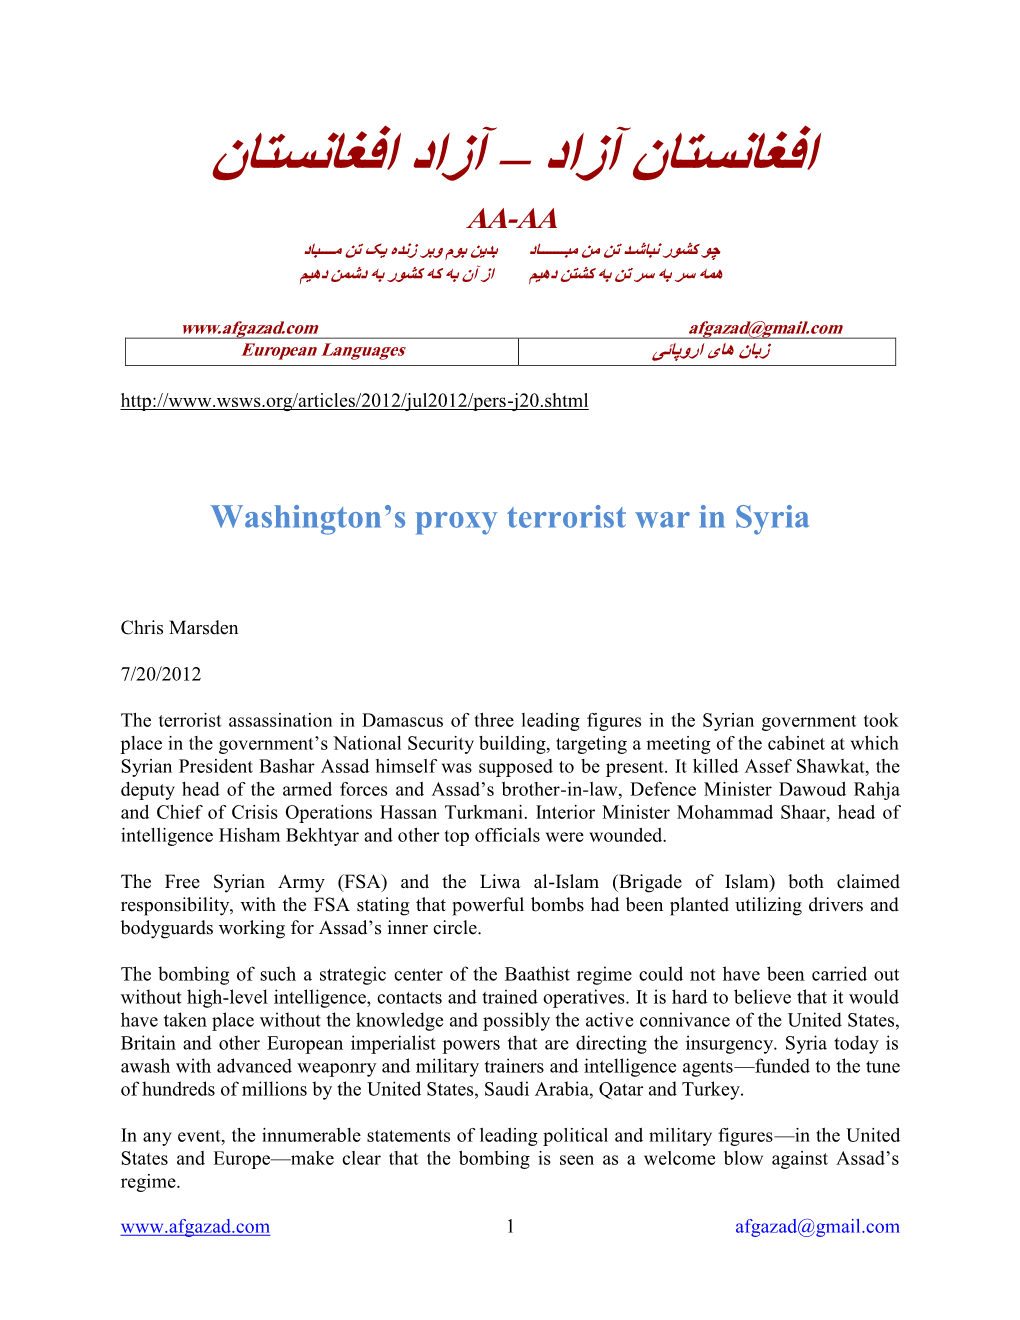 Washington's Proxy Terrorist War in Syria